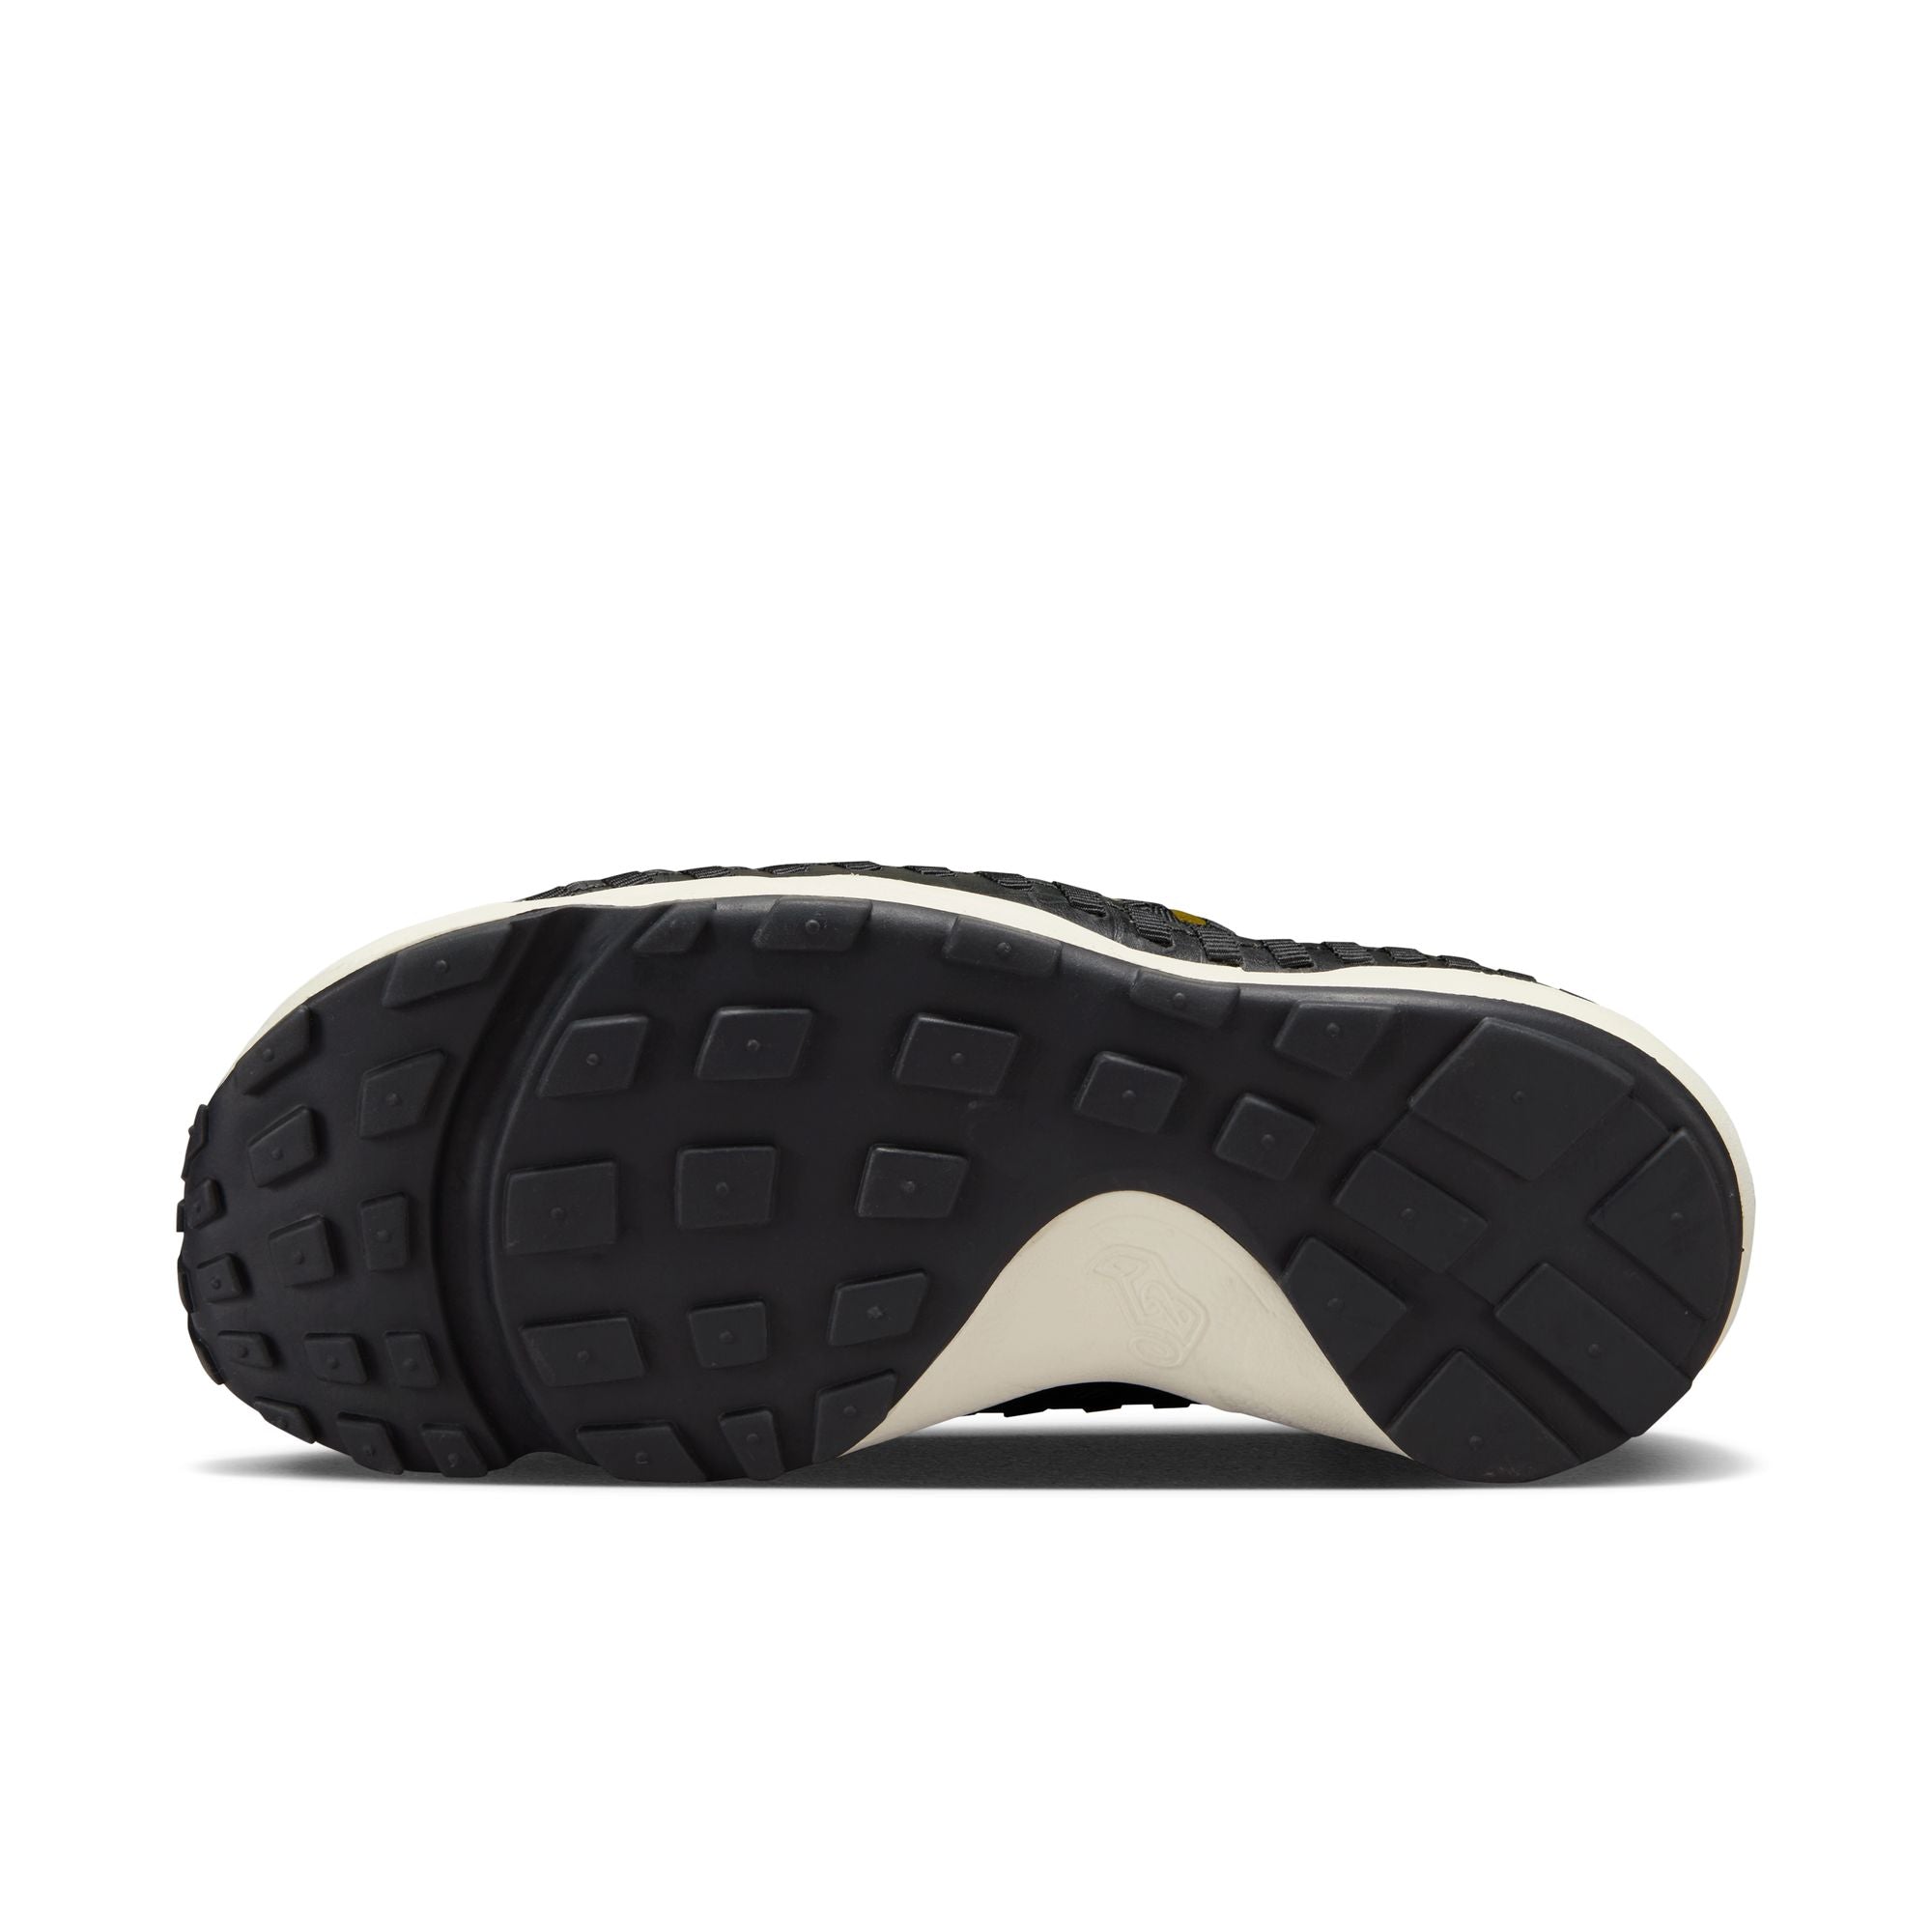 Air Footscape Woven Premium 'Black Croc' W - INVINCIBLE